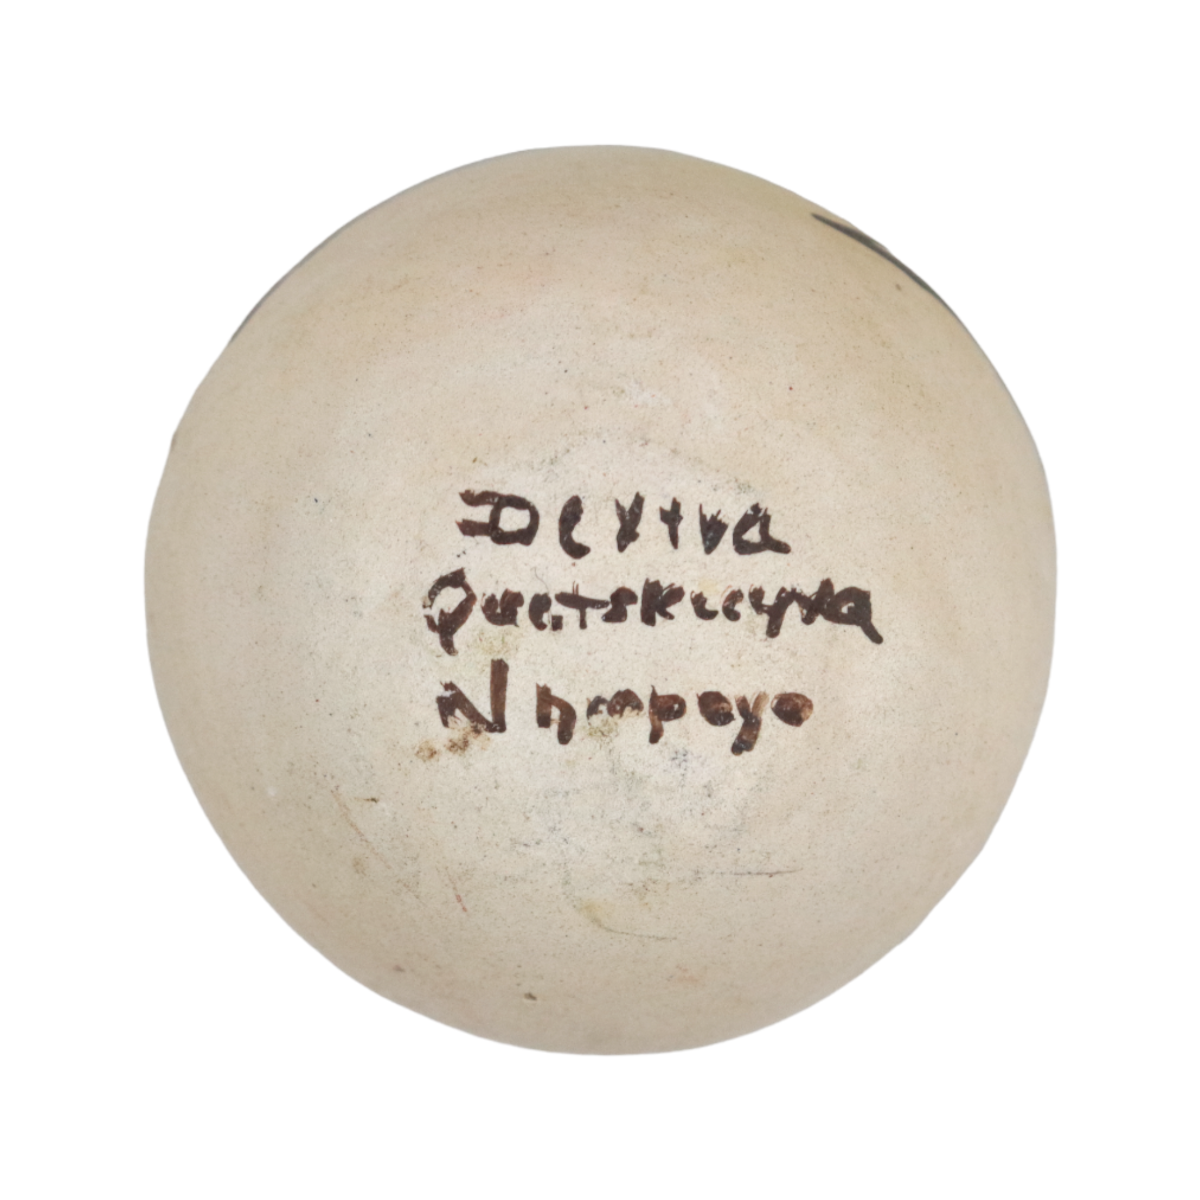 Dextra Quotskuyva Nampeyo (1928-2019) - Hopi Miniature Jar c. 1990-2000s, 1" x 1.5" (P3570-059) 6